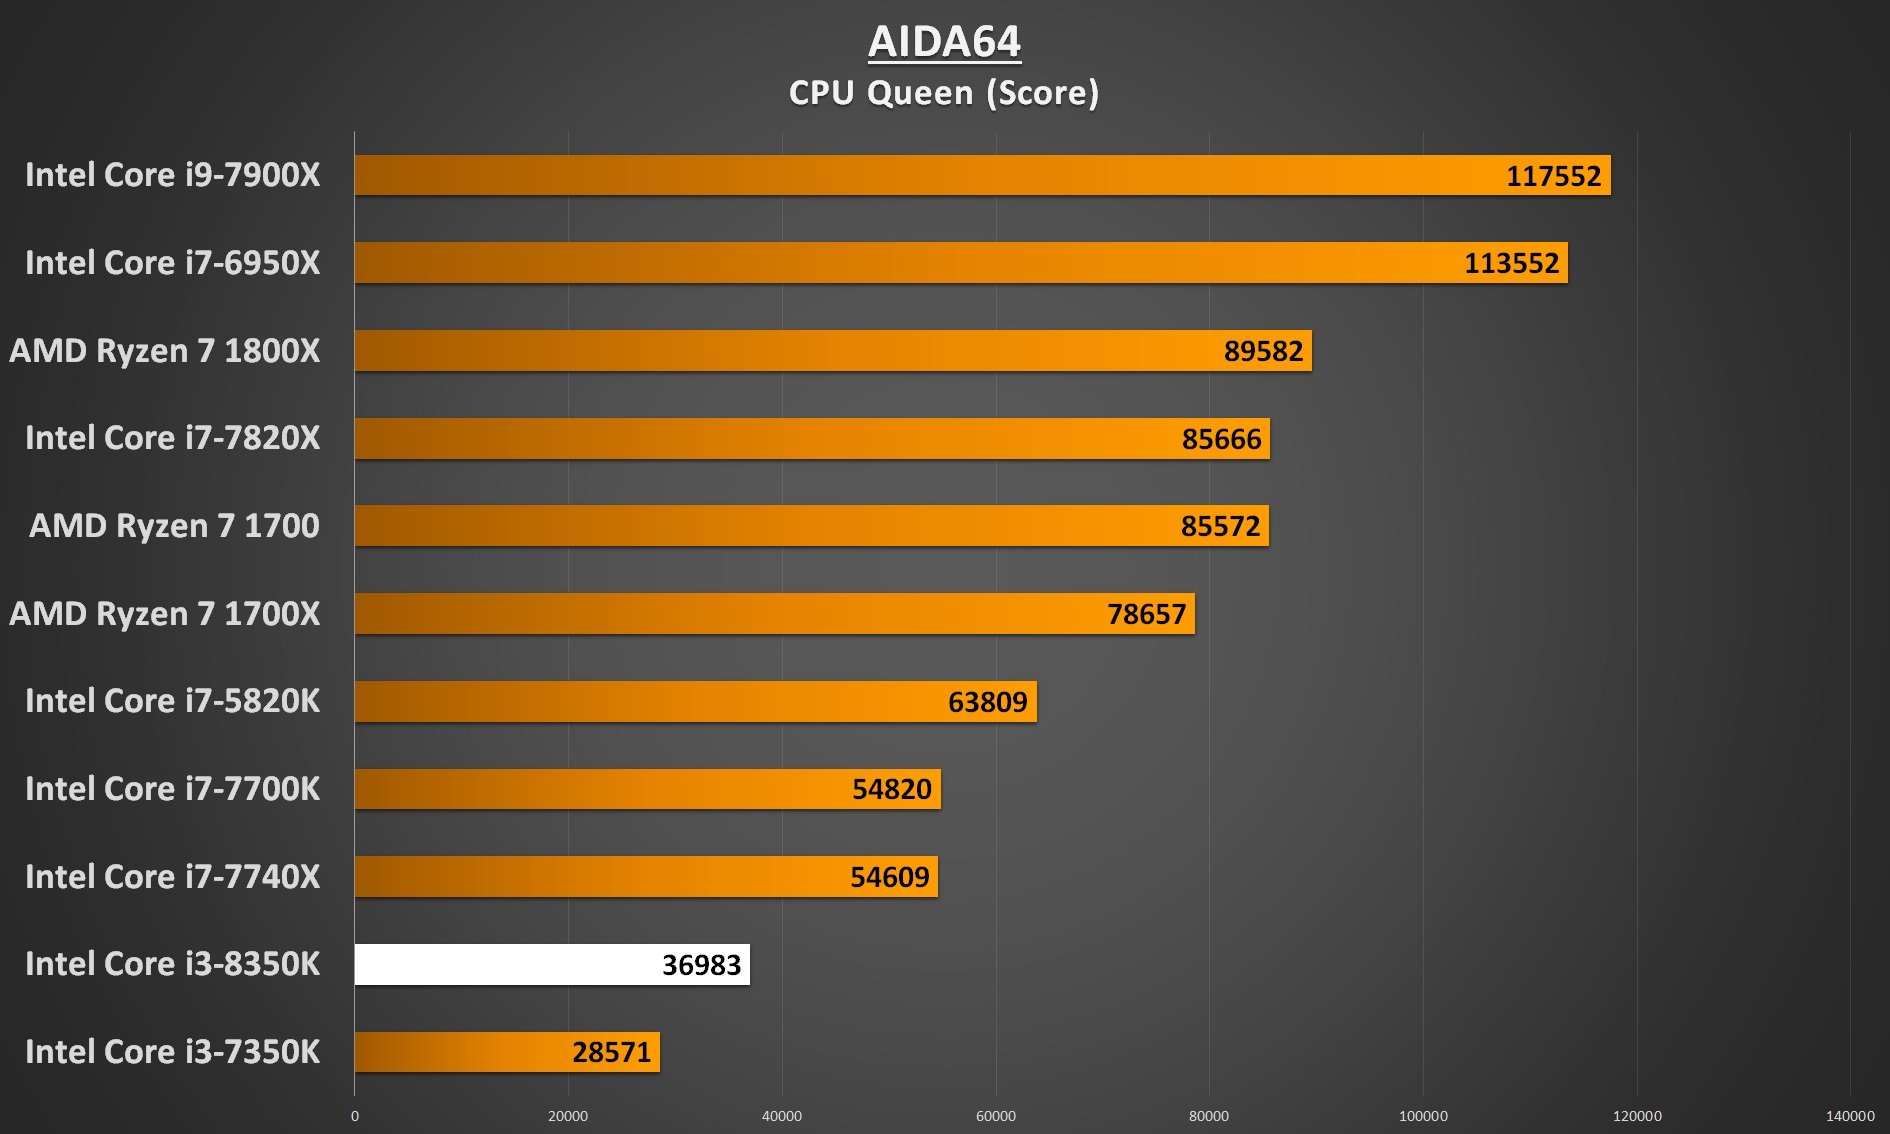 Intel Core i3-8350 Performance - AIDA64 CPU Queen